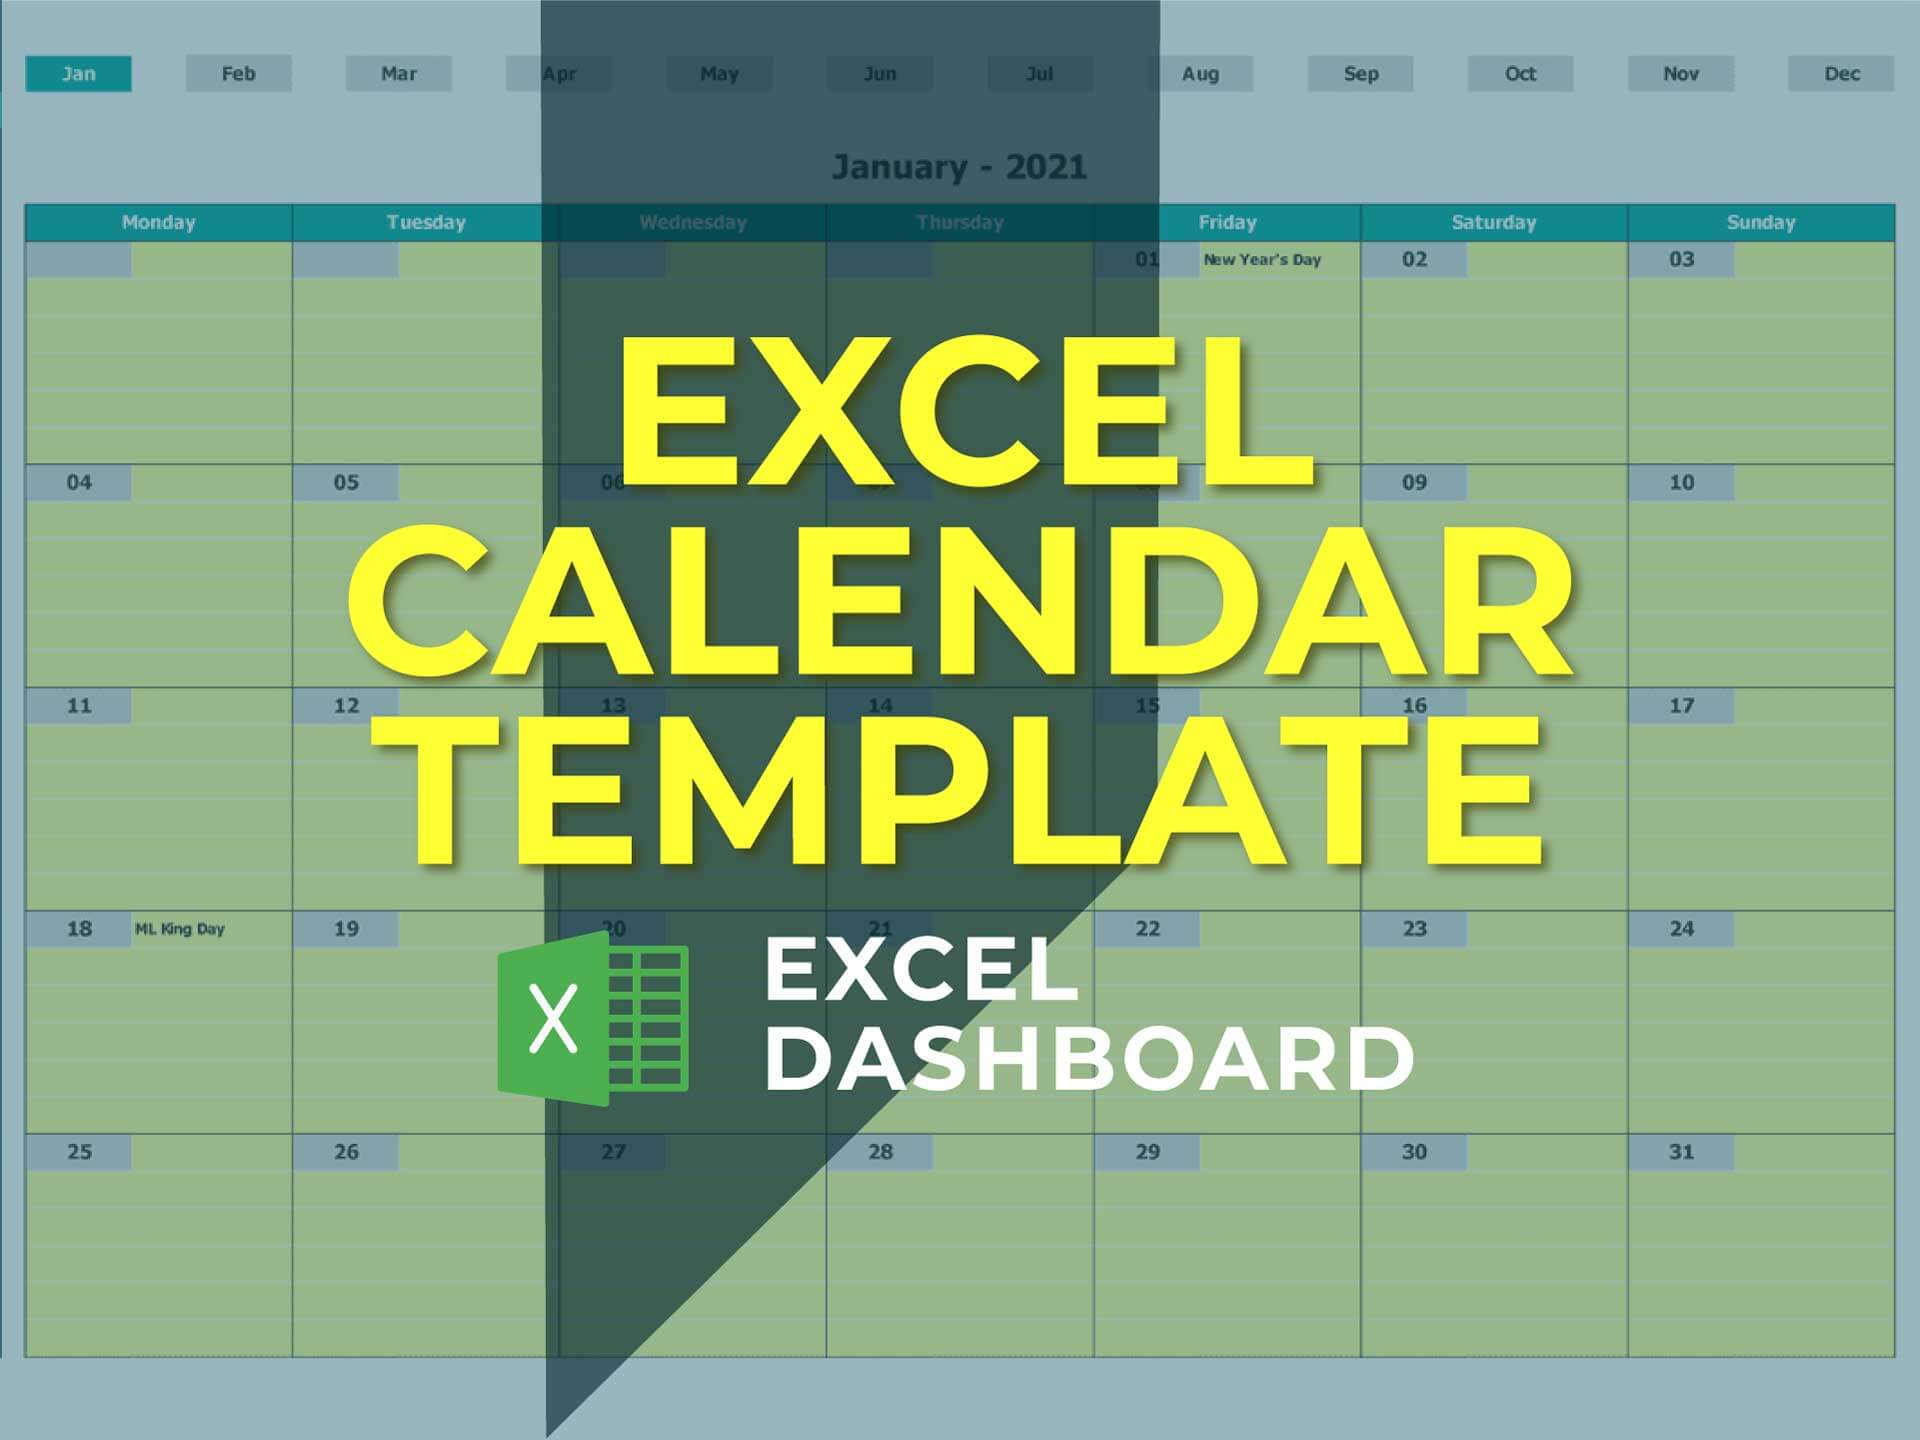 Excel Calendar Template Dashboard